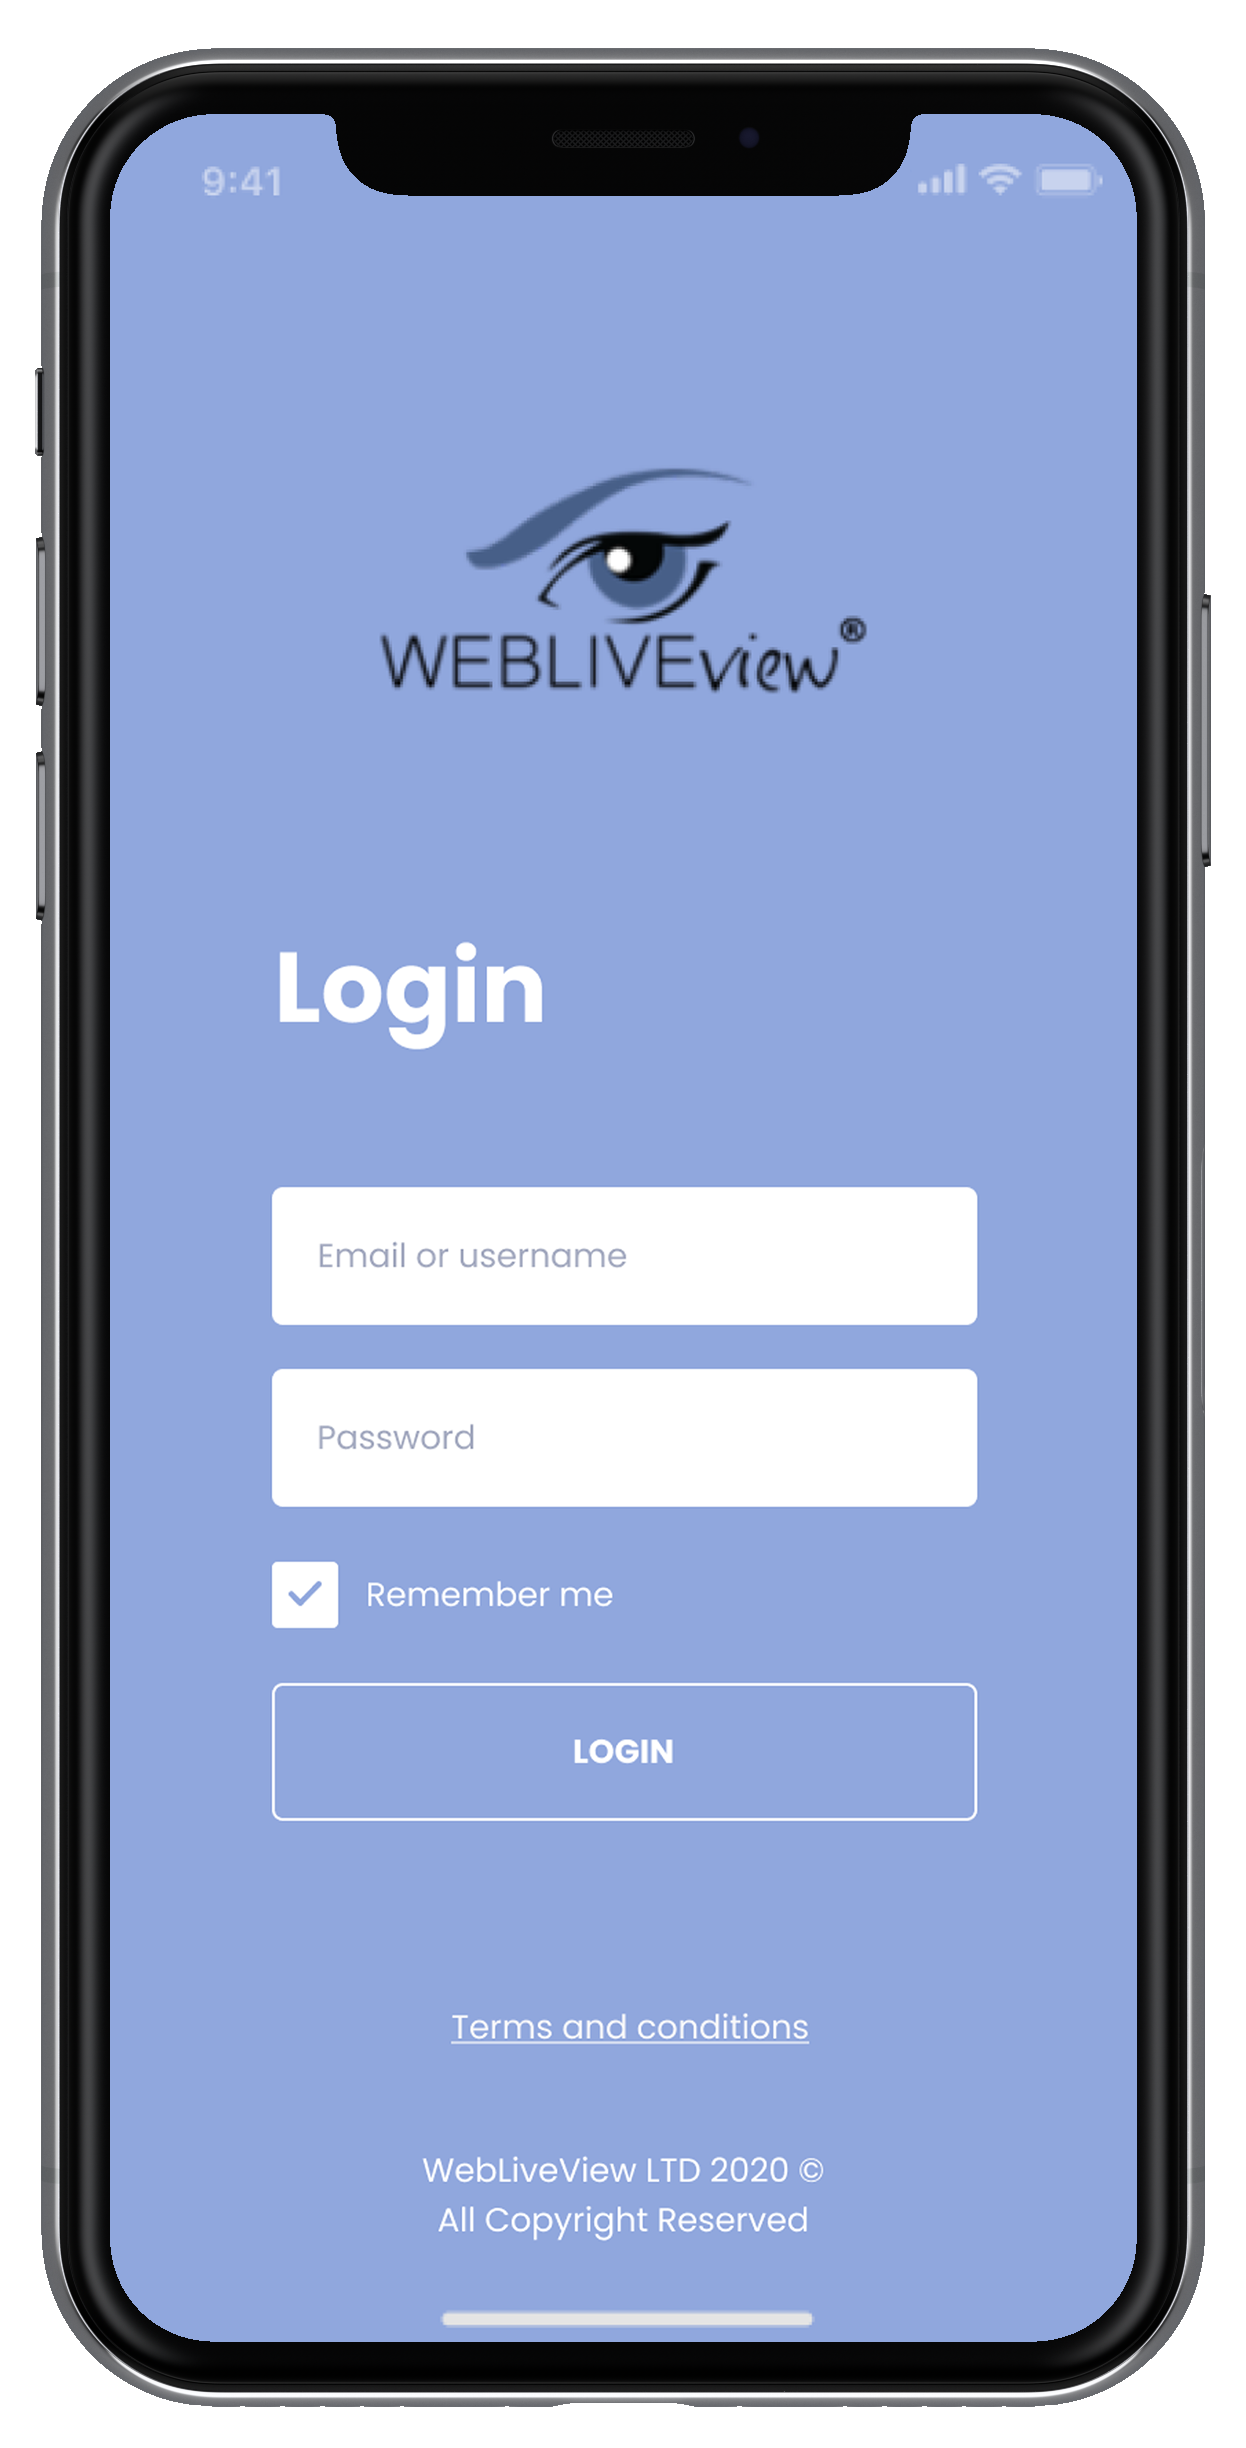 Webliveview sales app